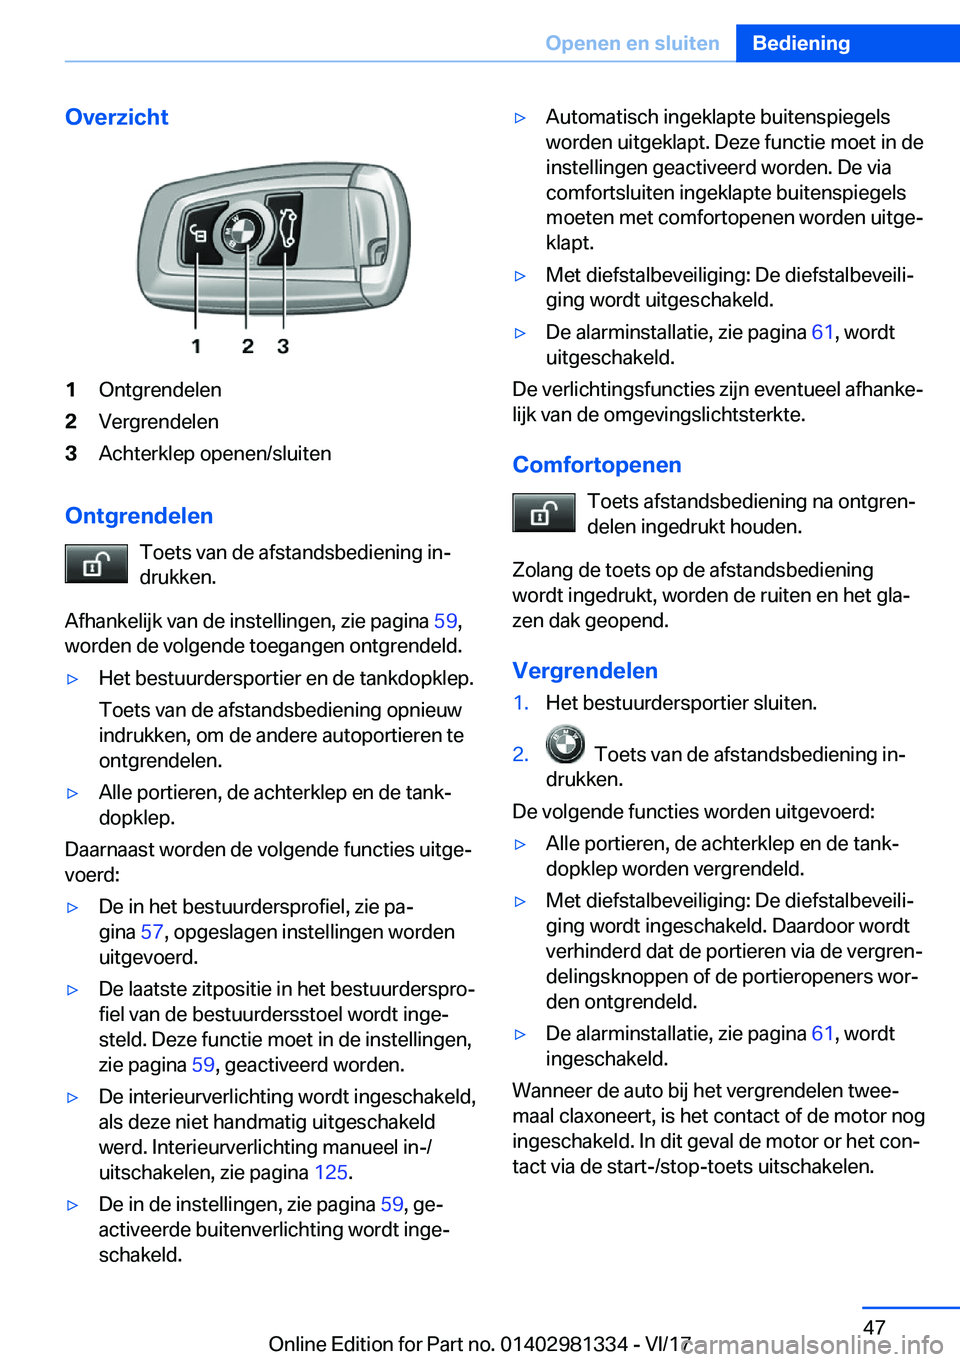 BMW X4 2018  Instructieboekjes (in Dutch) �O�v�e�r�z�i�c�h�t�1�O�n�t�g�r�e�n�d�e�l�e�n�2�V�e�r�g�r�e�n�d�e�l�e�n�3�A�c�h�t�e�r�k�l�e�p� �o�p�e�n�e�n�/�s�l�u�i�t�e�n
�O�n�t�g�r�e�n�d�e�l�e�n�T�o�e�t�s� �v�a�n� �d�e� �a�f�s�t�a�n�d�s�b�e�d�i�e�